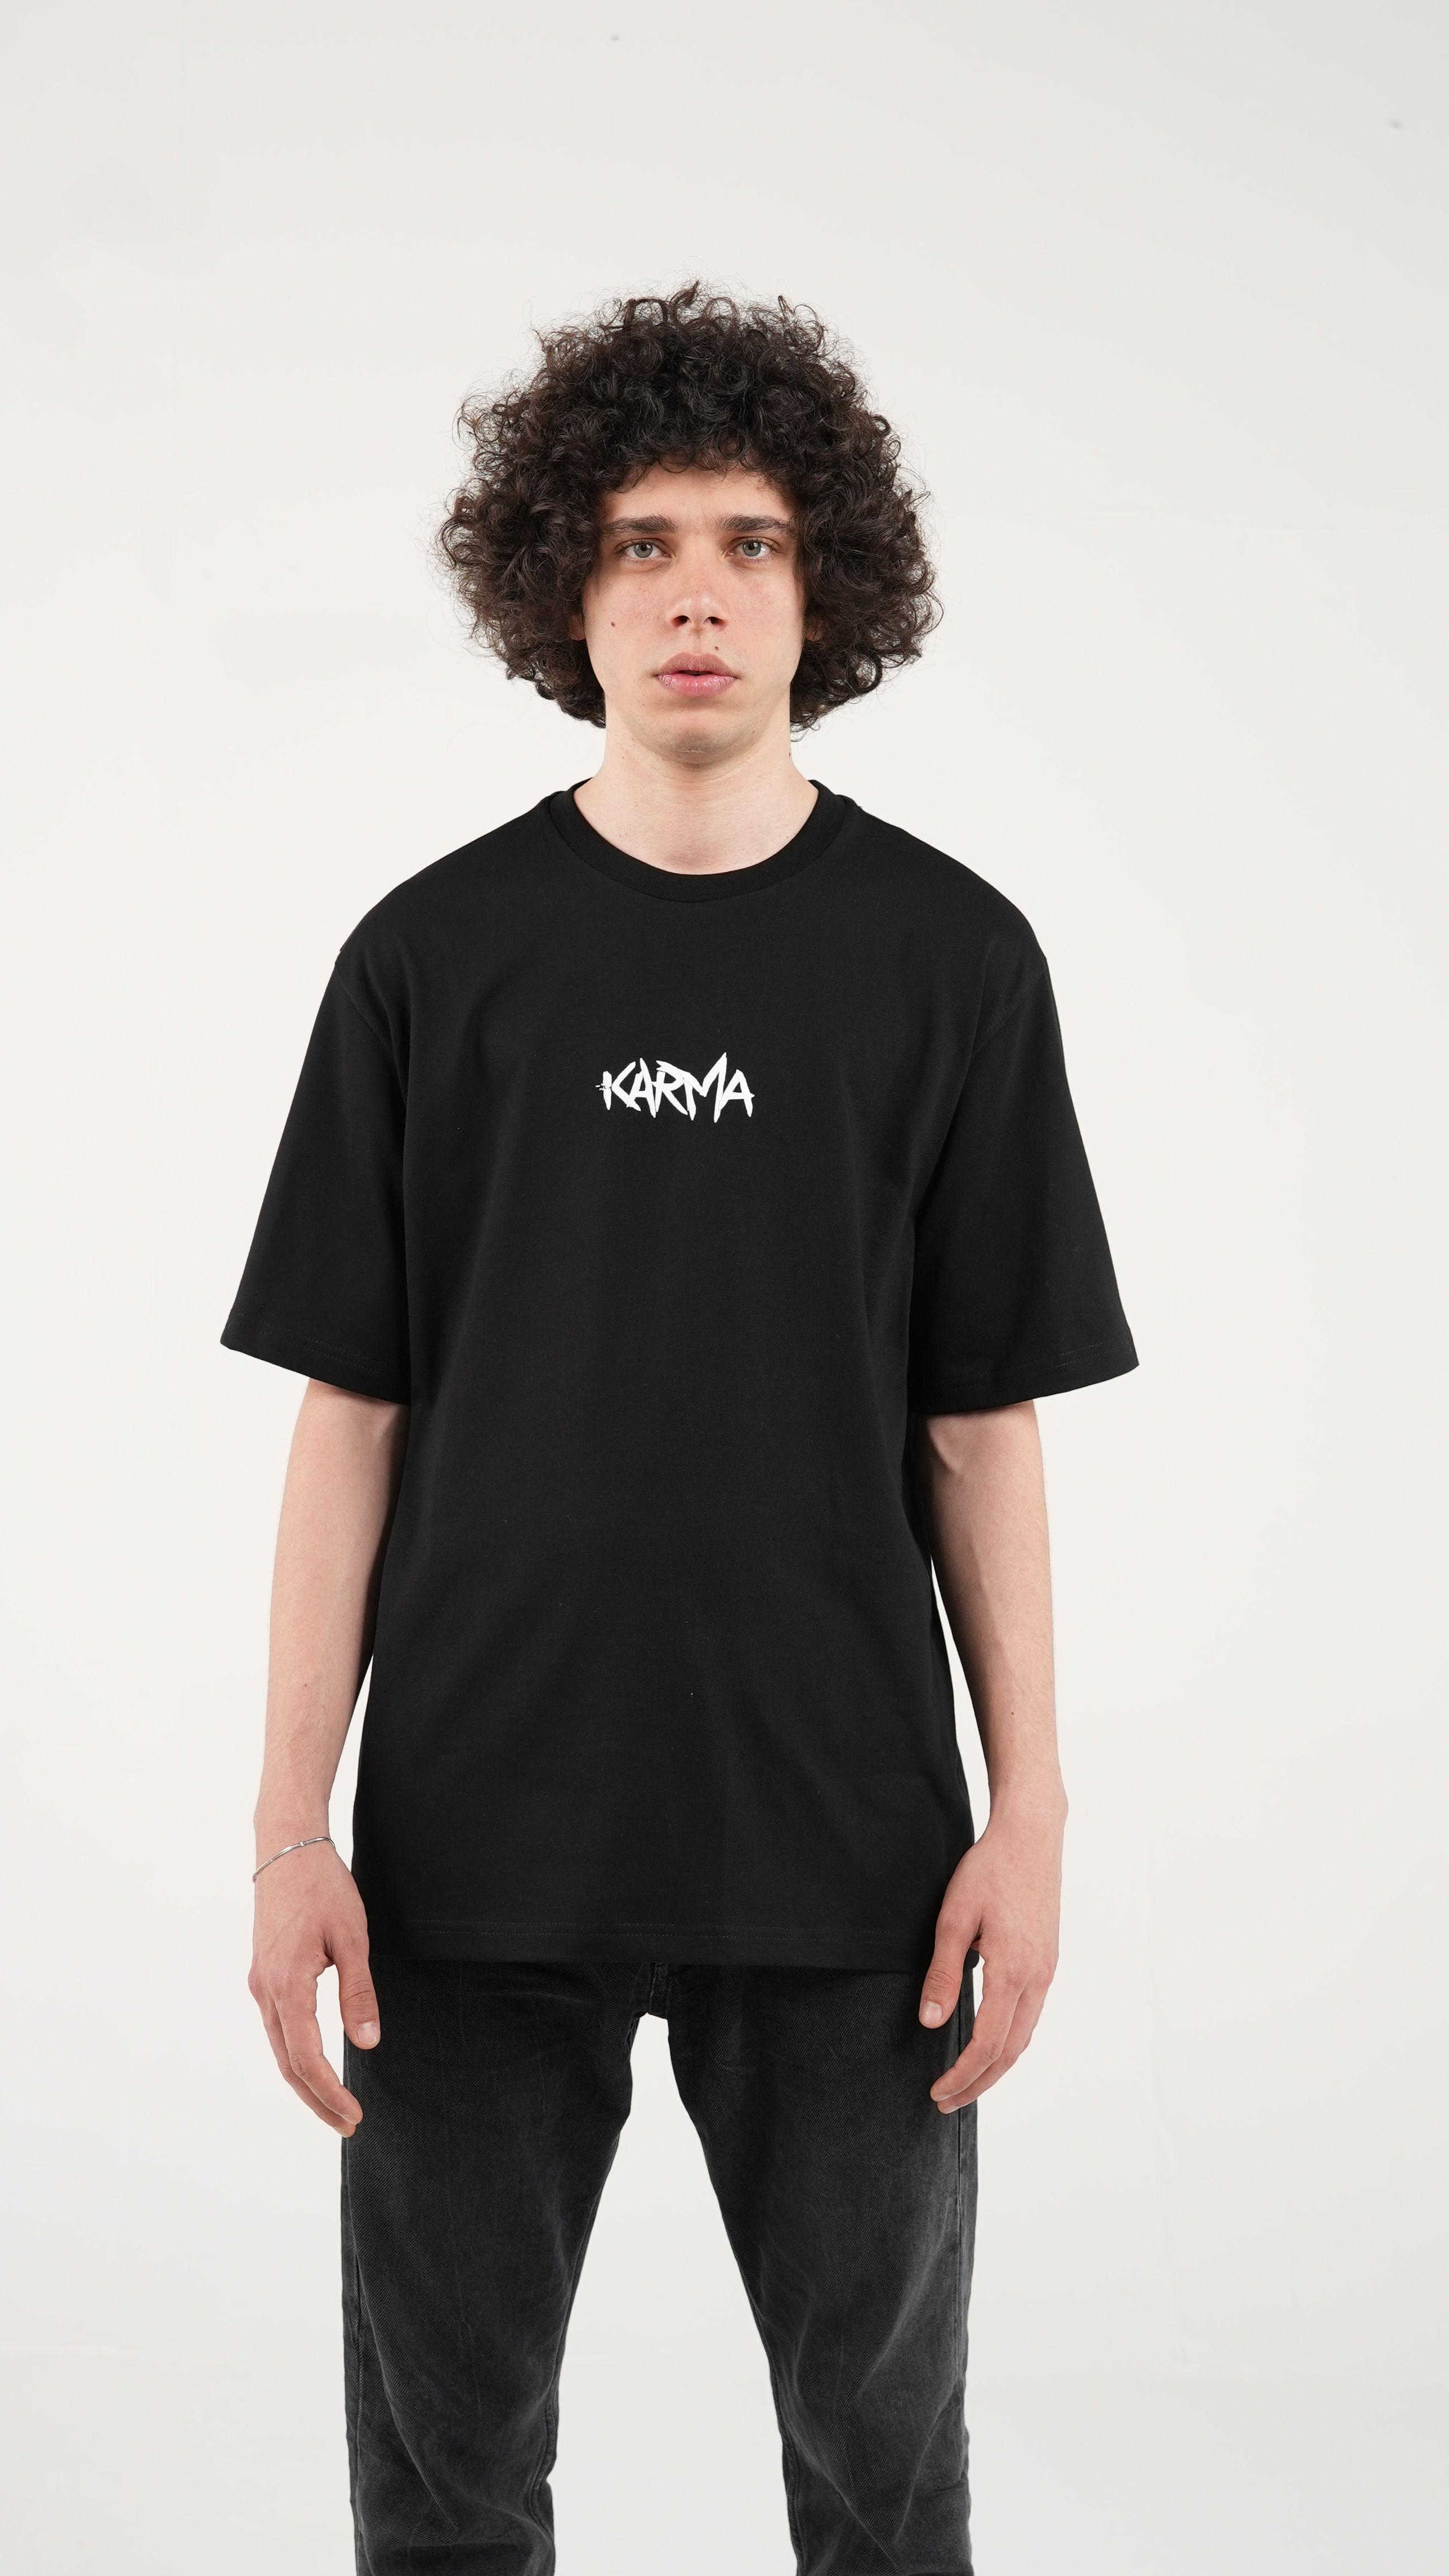 Karma Limited Edition Chrome T Shirt